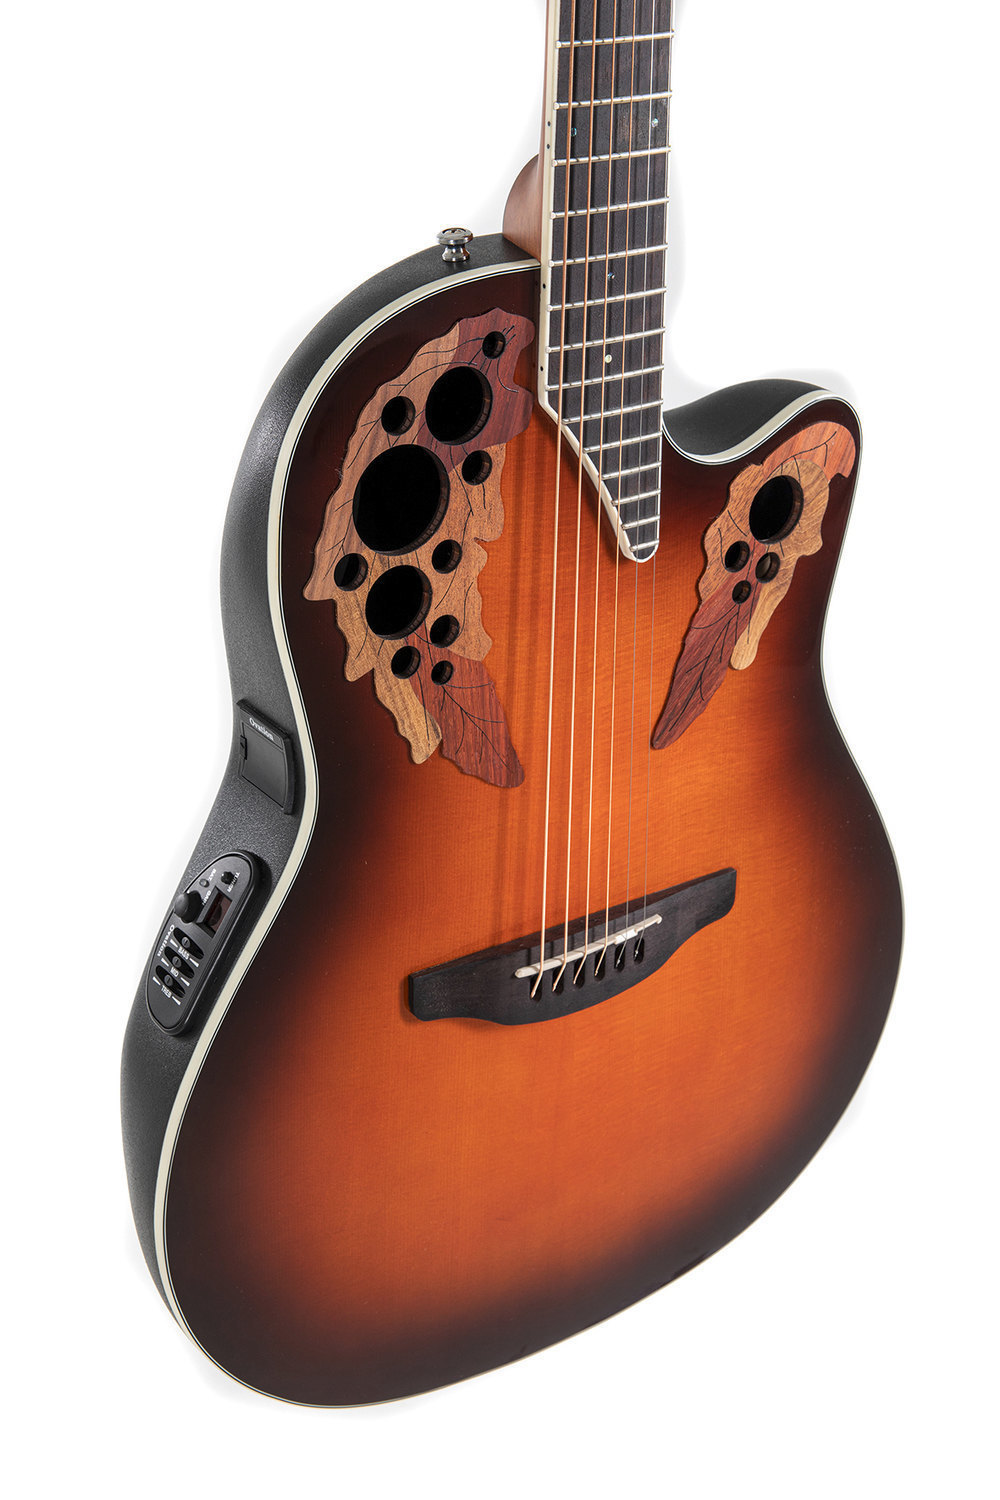 Ovation Celebrity Elite E-Acoustic Guitar CE48-1, Sunburst